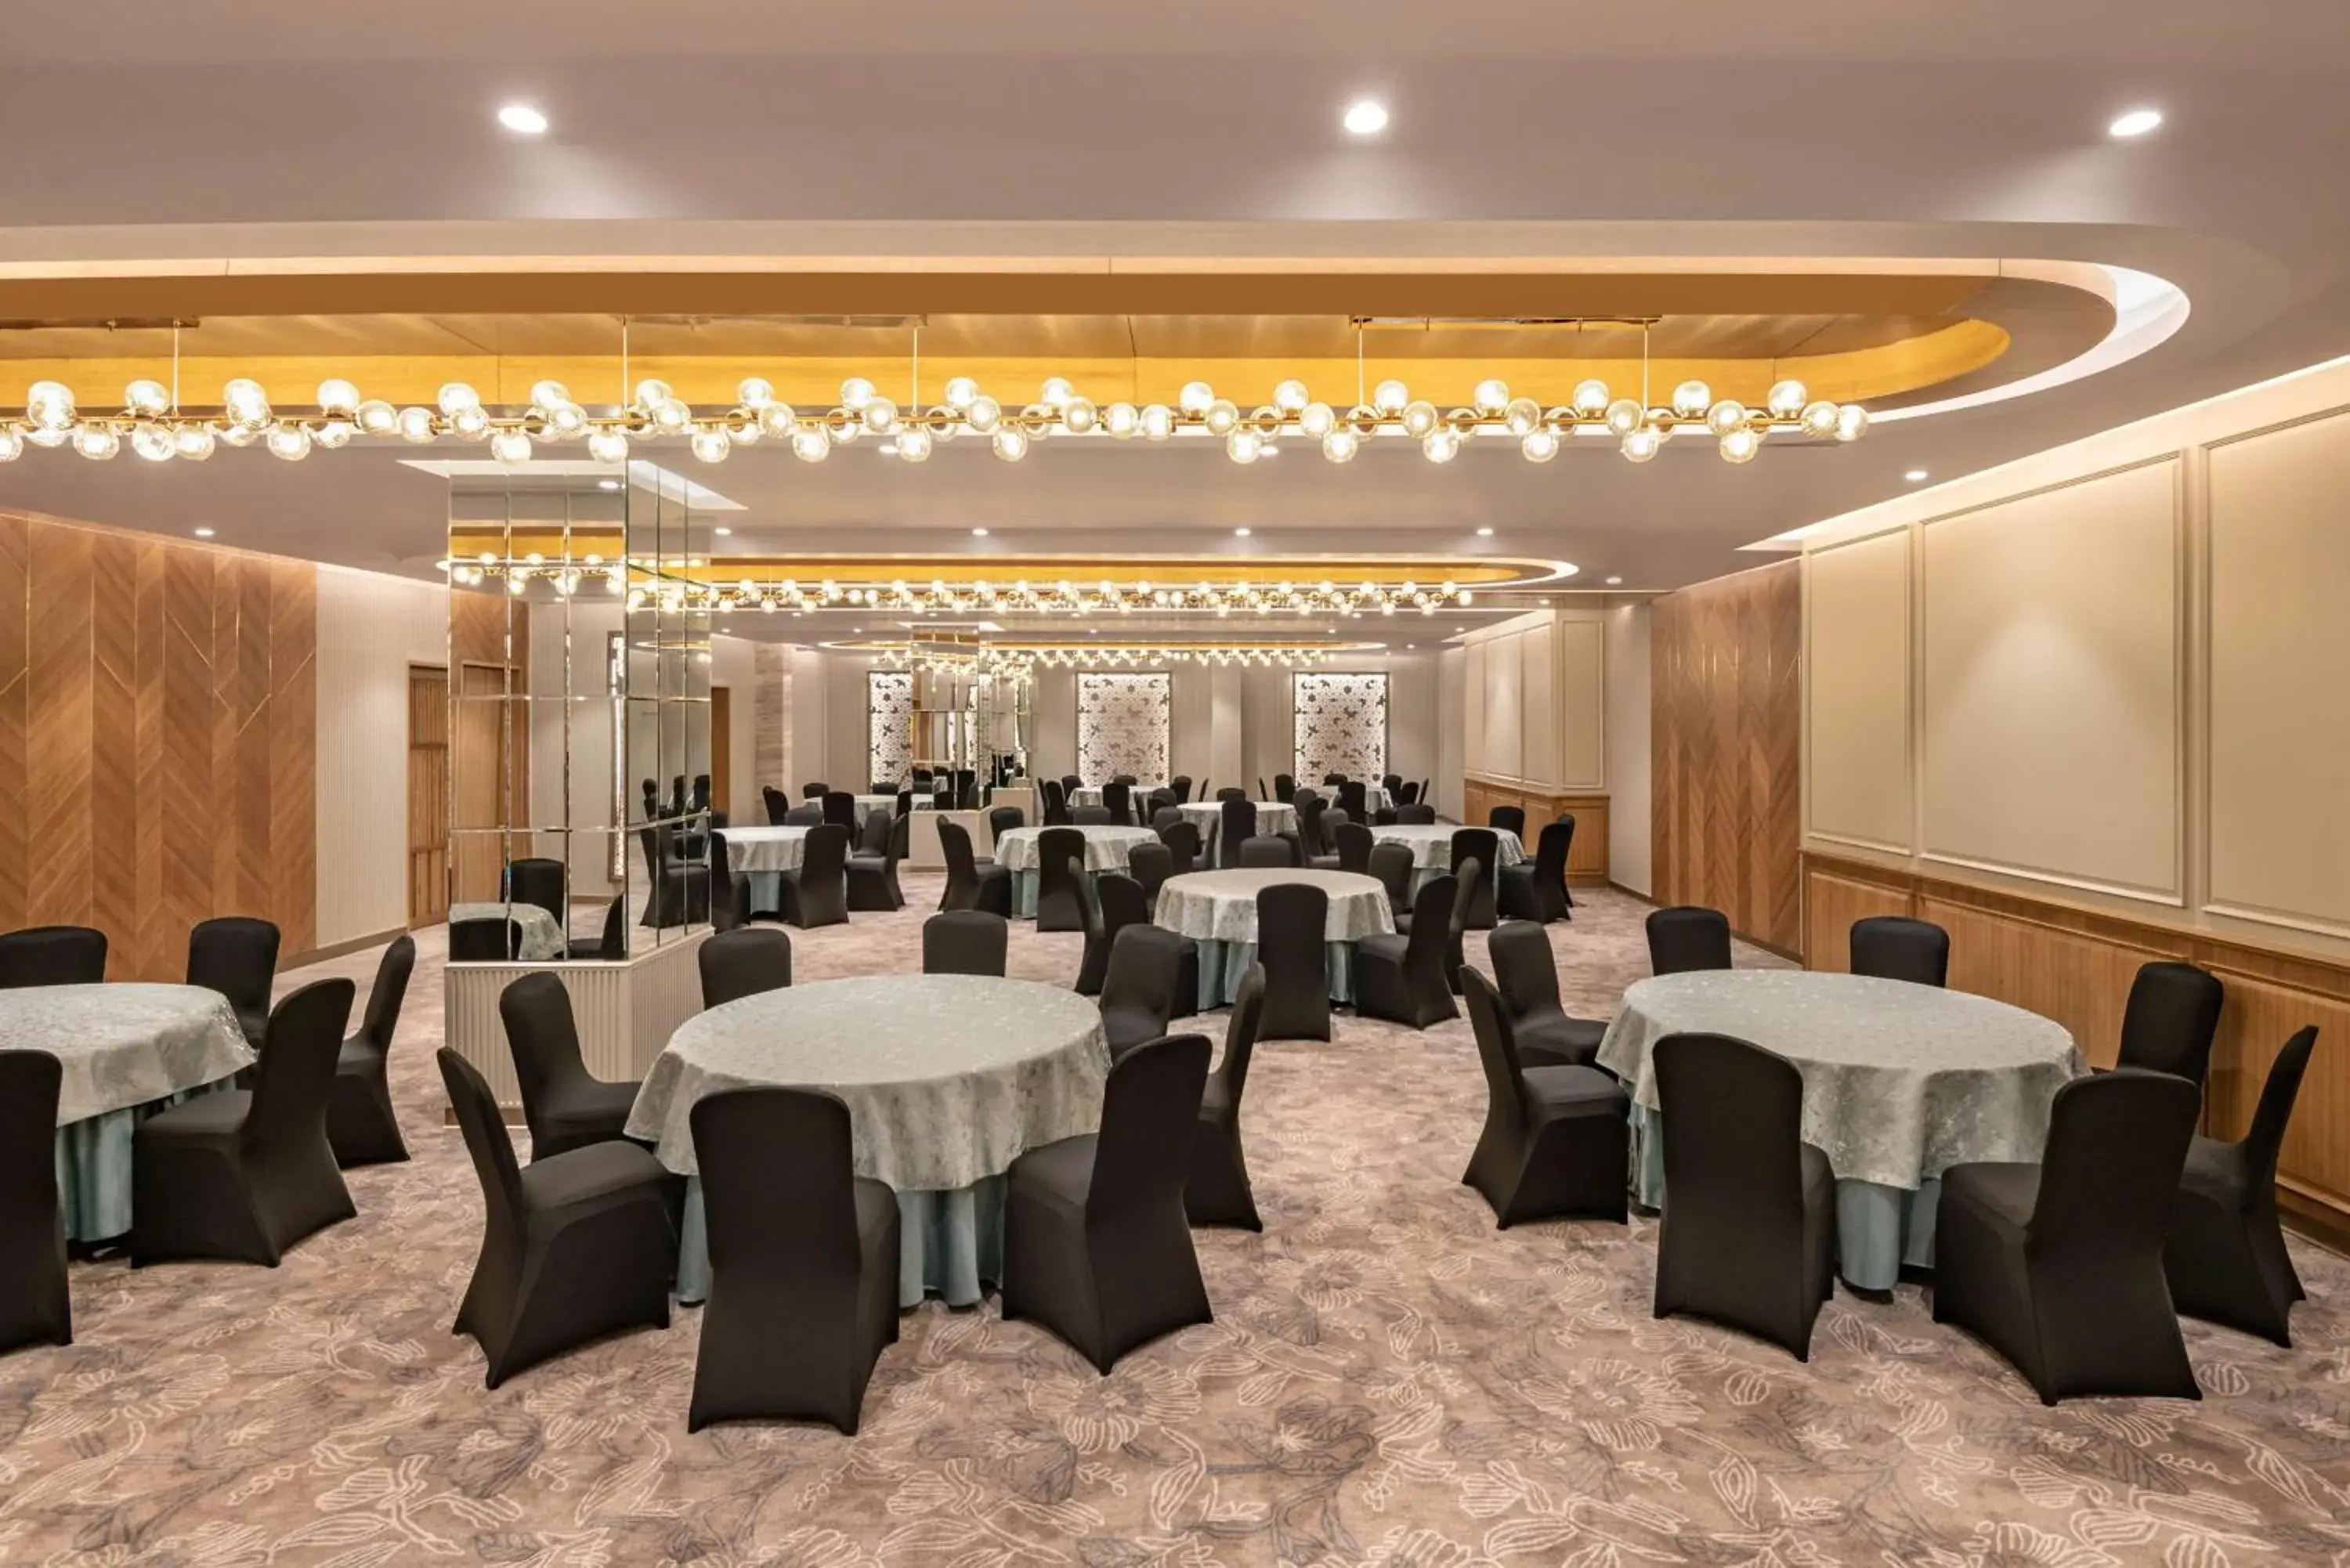 Banquet/Function facilities, Banquet Facilities in Radisson Hotel Sector 29 Gurugram